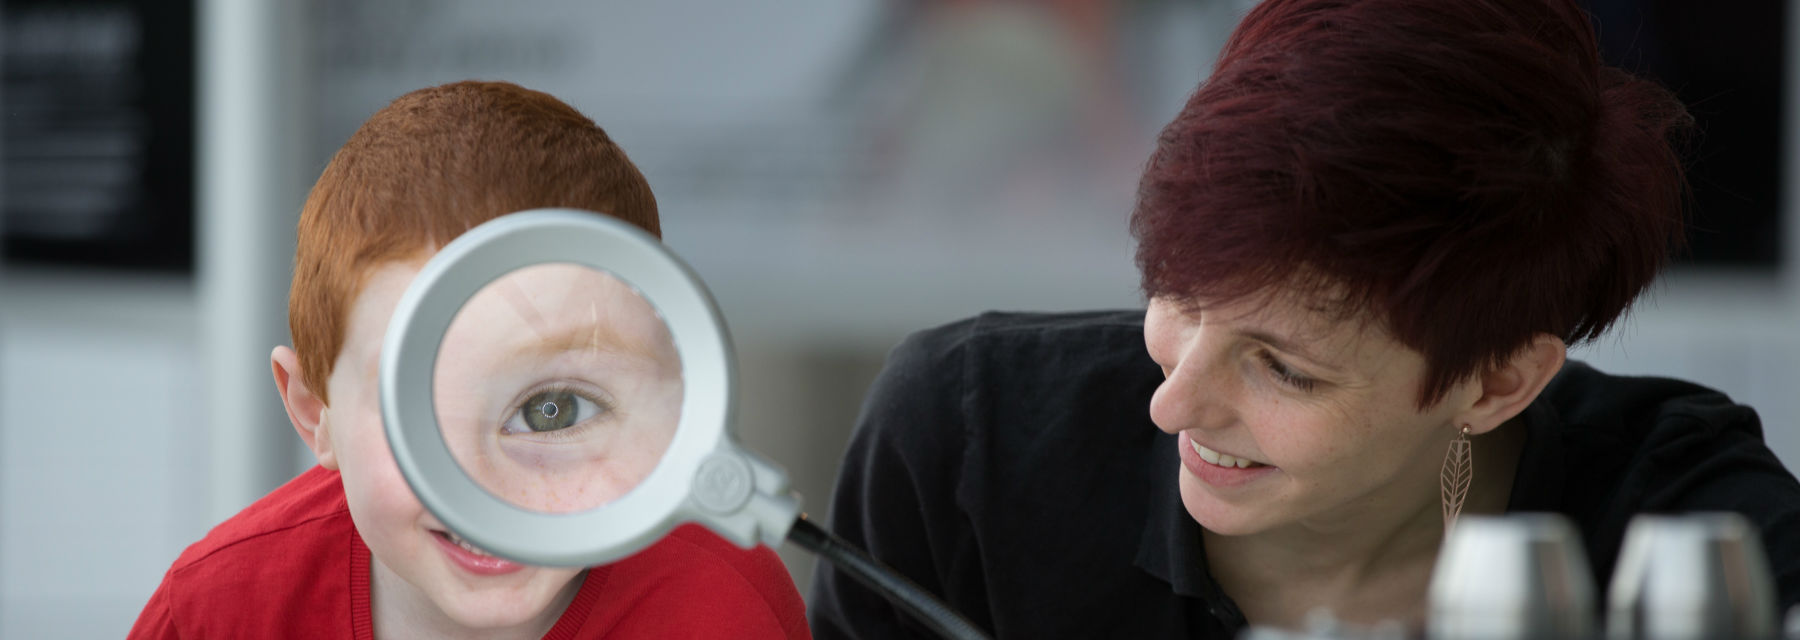 A boy's eye appears huge through a magnifying glass. An expert sits beside him.